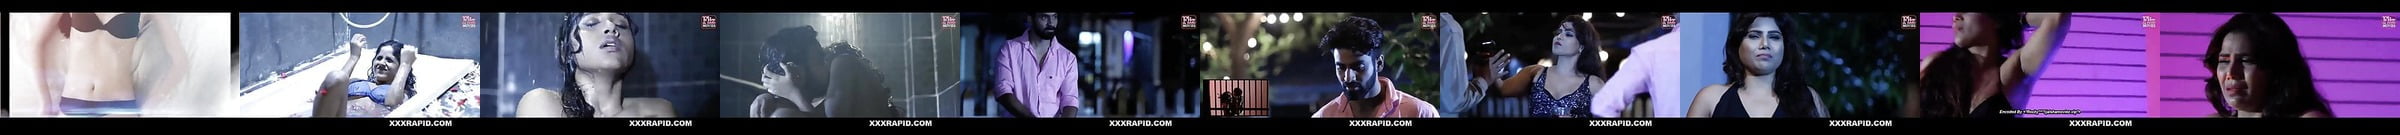 Sarla Bhabhi S01 E01 All Hot Scenes Free Porn D8 Xhamster